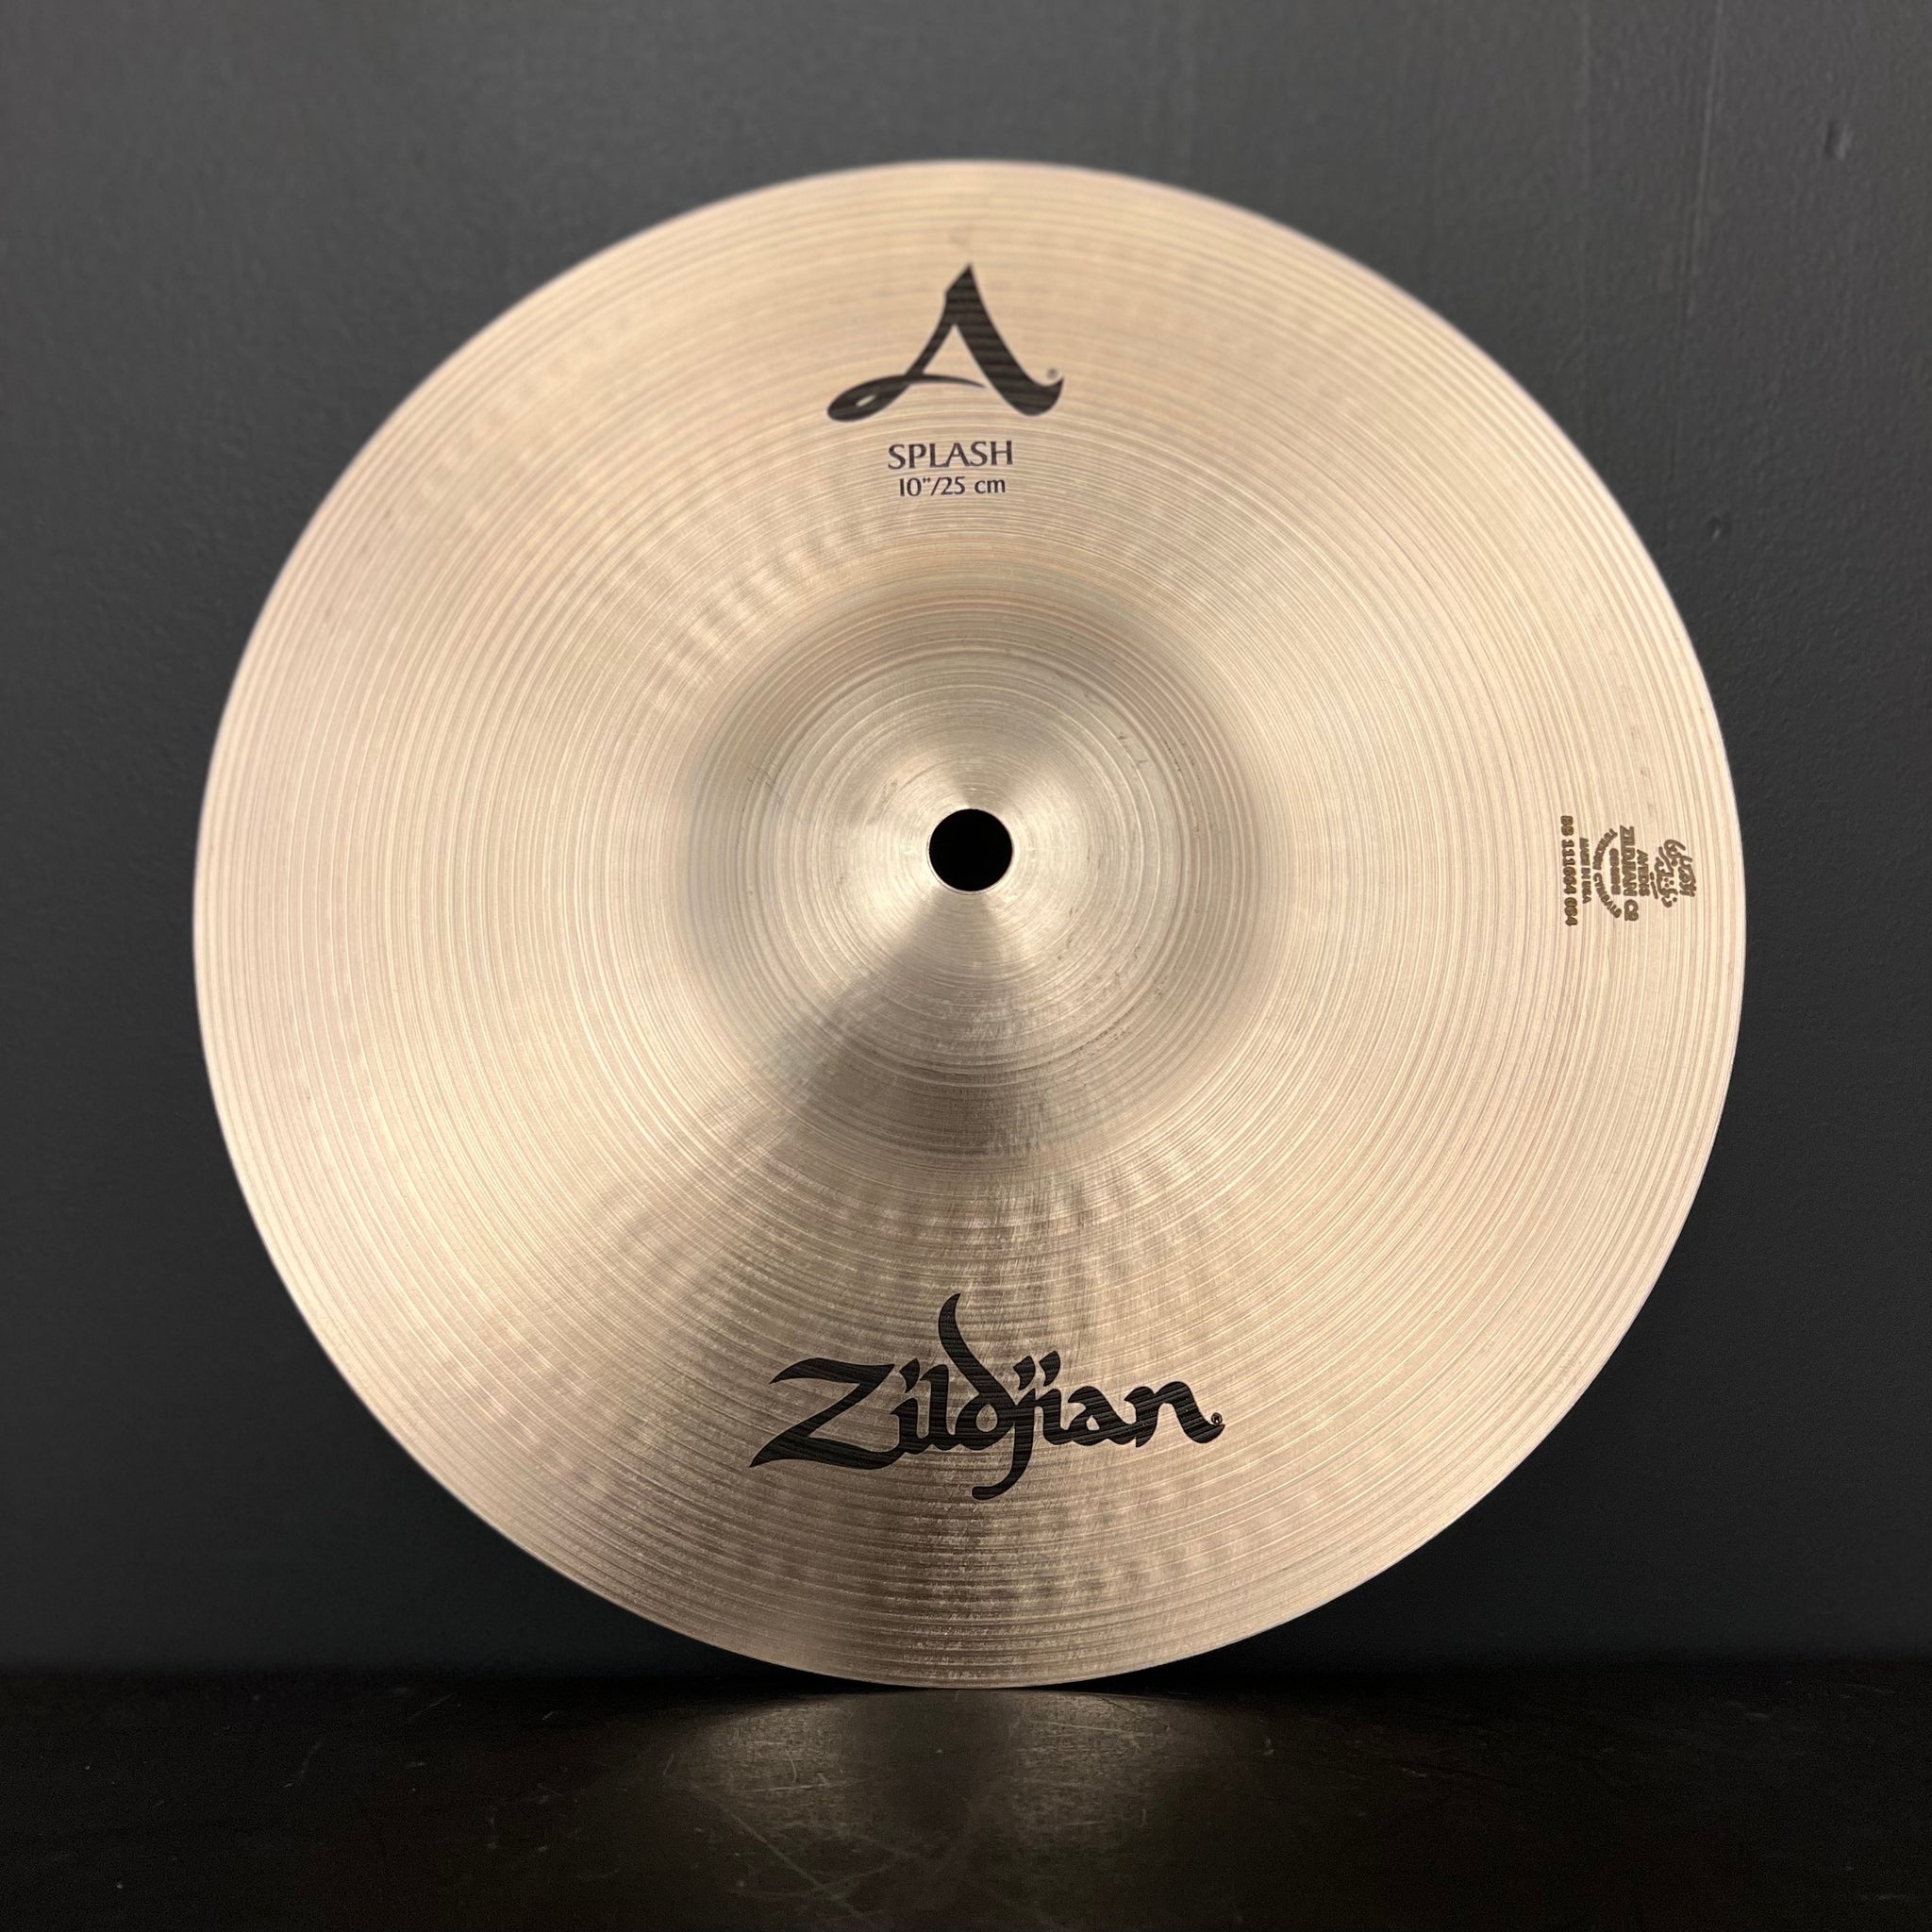 NEW Zildjian 10" A. Zildjian Splash Cymbal - 255g